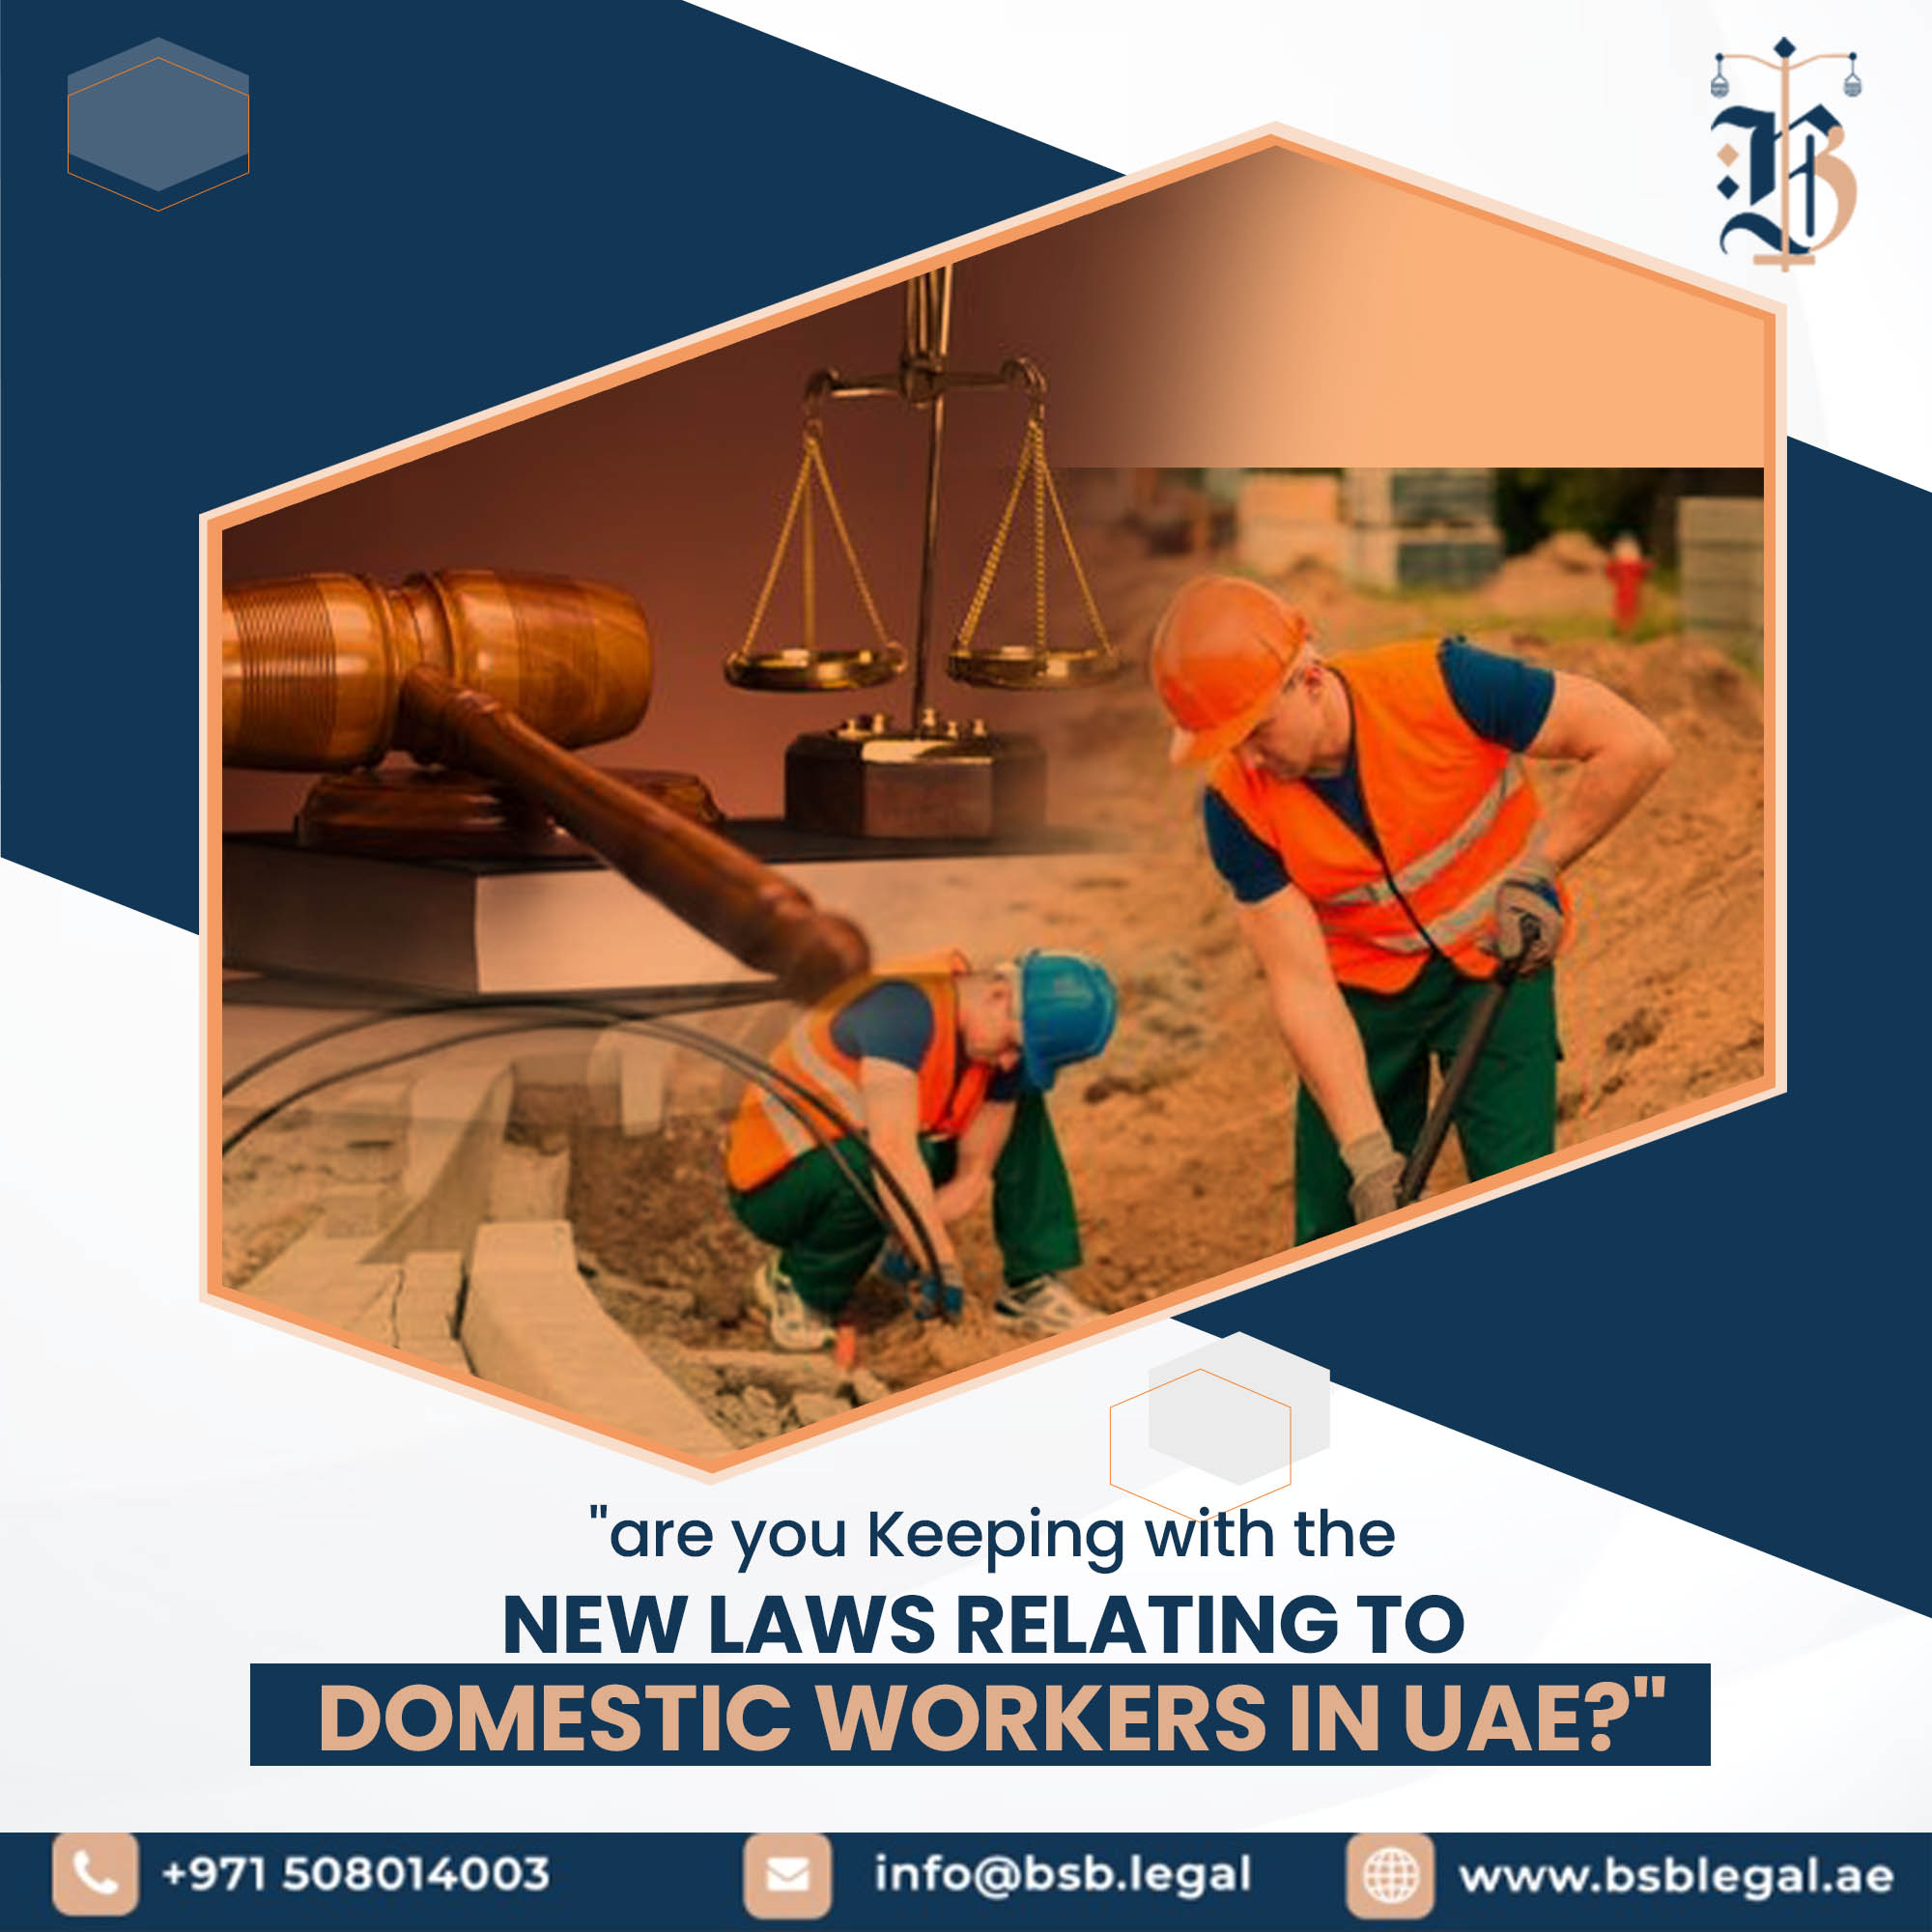 DOMESTIC WORKERS IN UAE